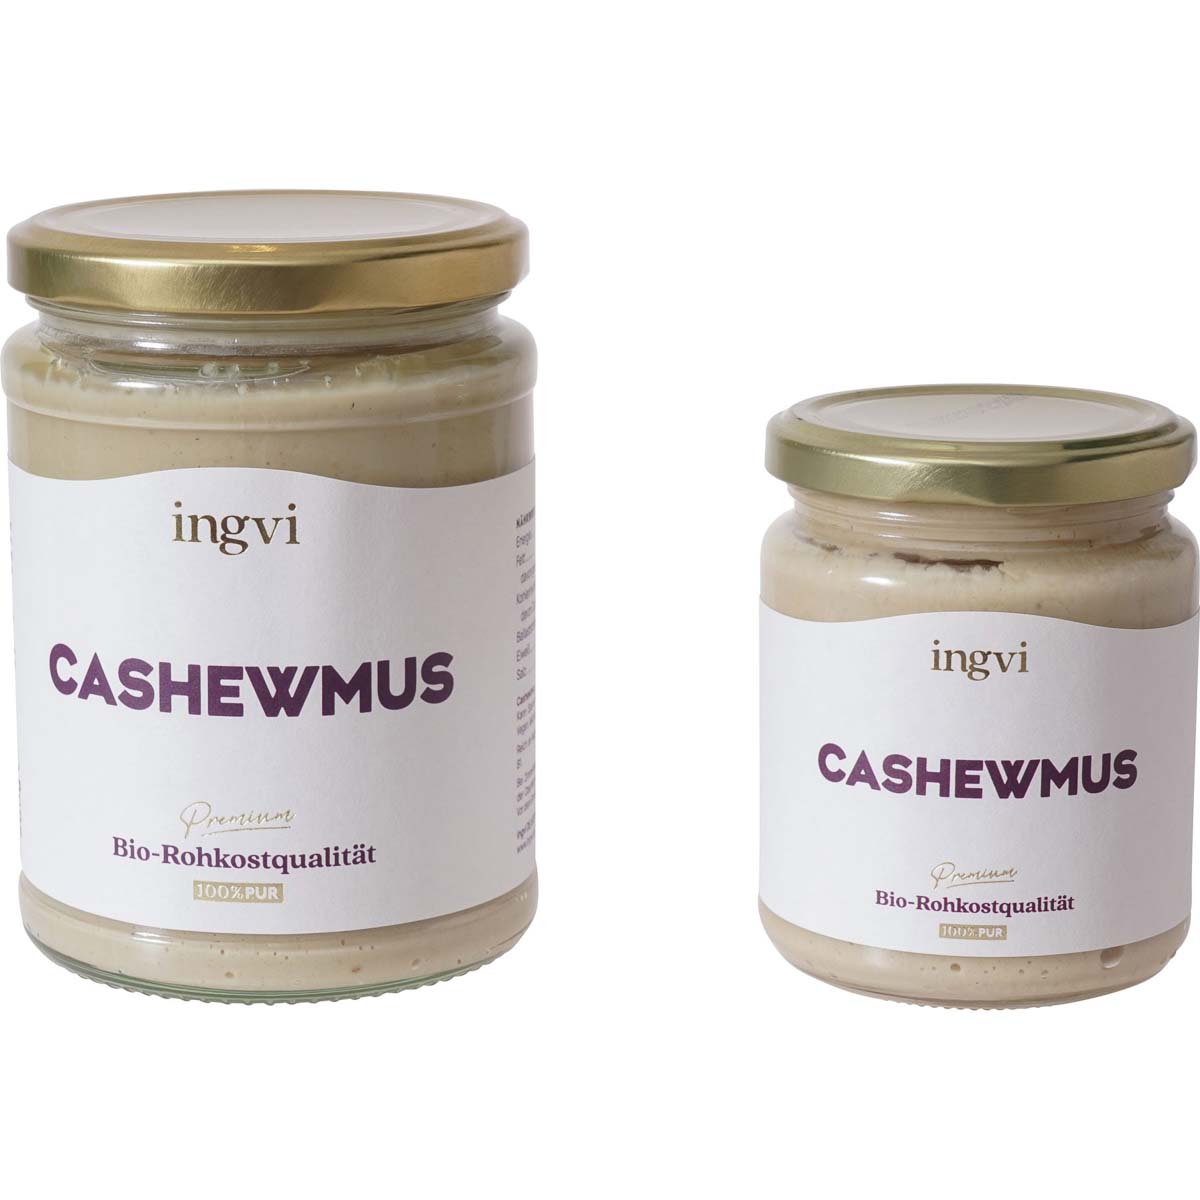 Cashewmus Bio, roh, ingvi 250 g